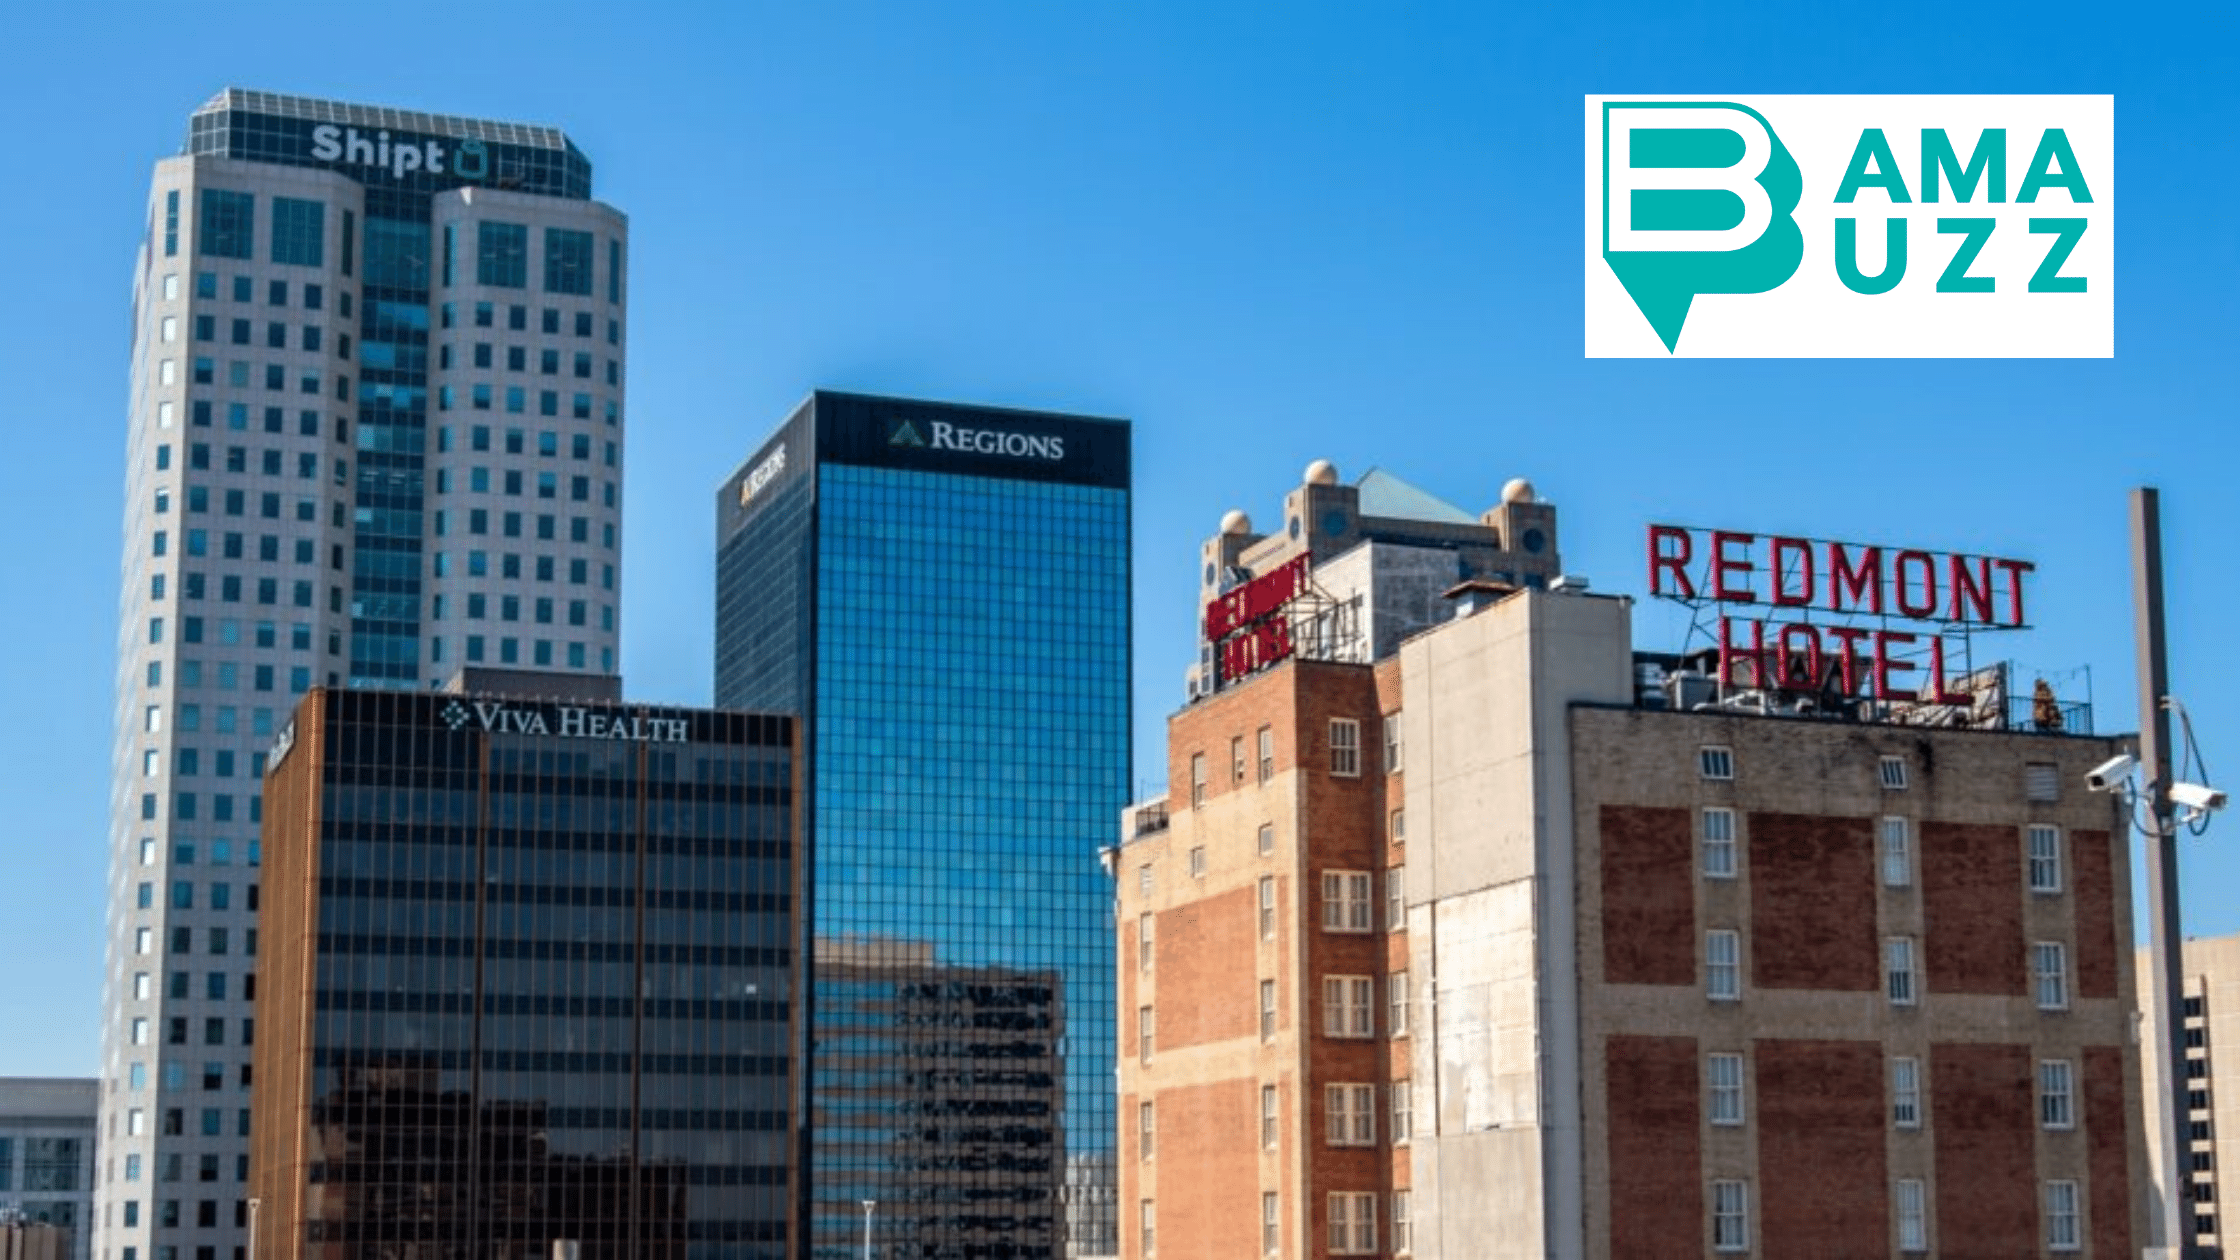 Birmingham skyline for Bama Buzz story on Alabama startups including Boulo Solutions staffing company